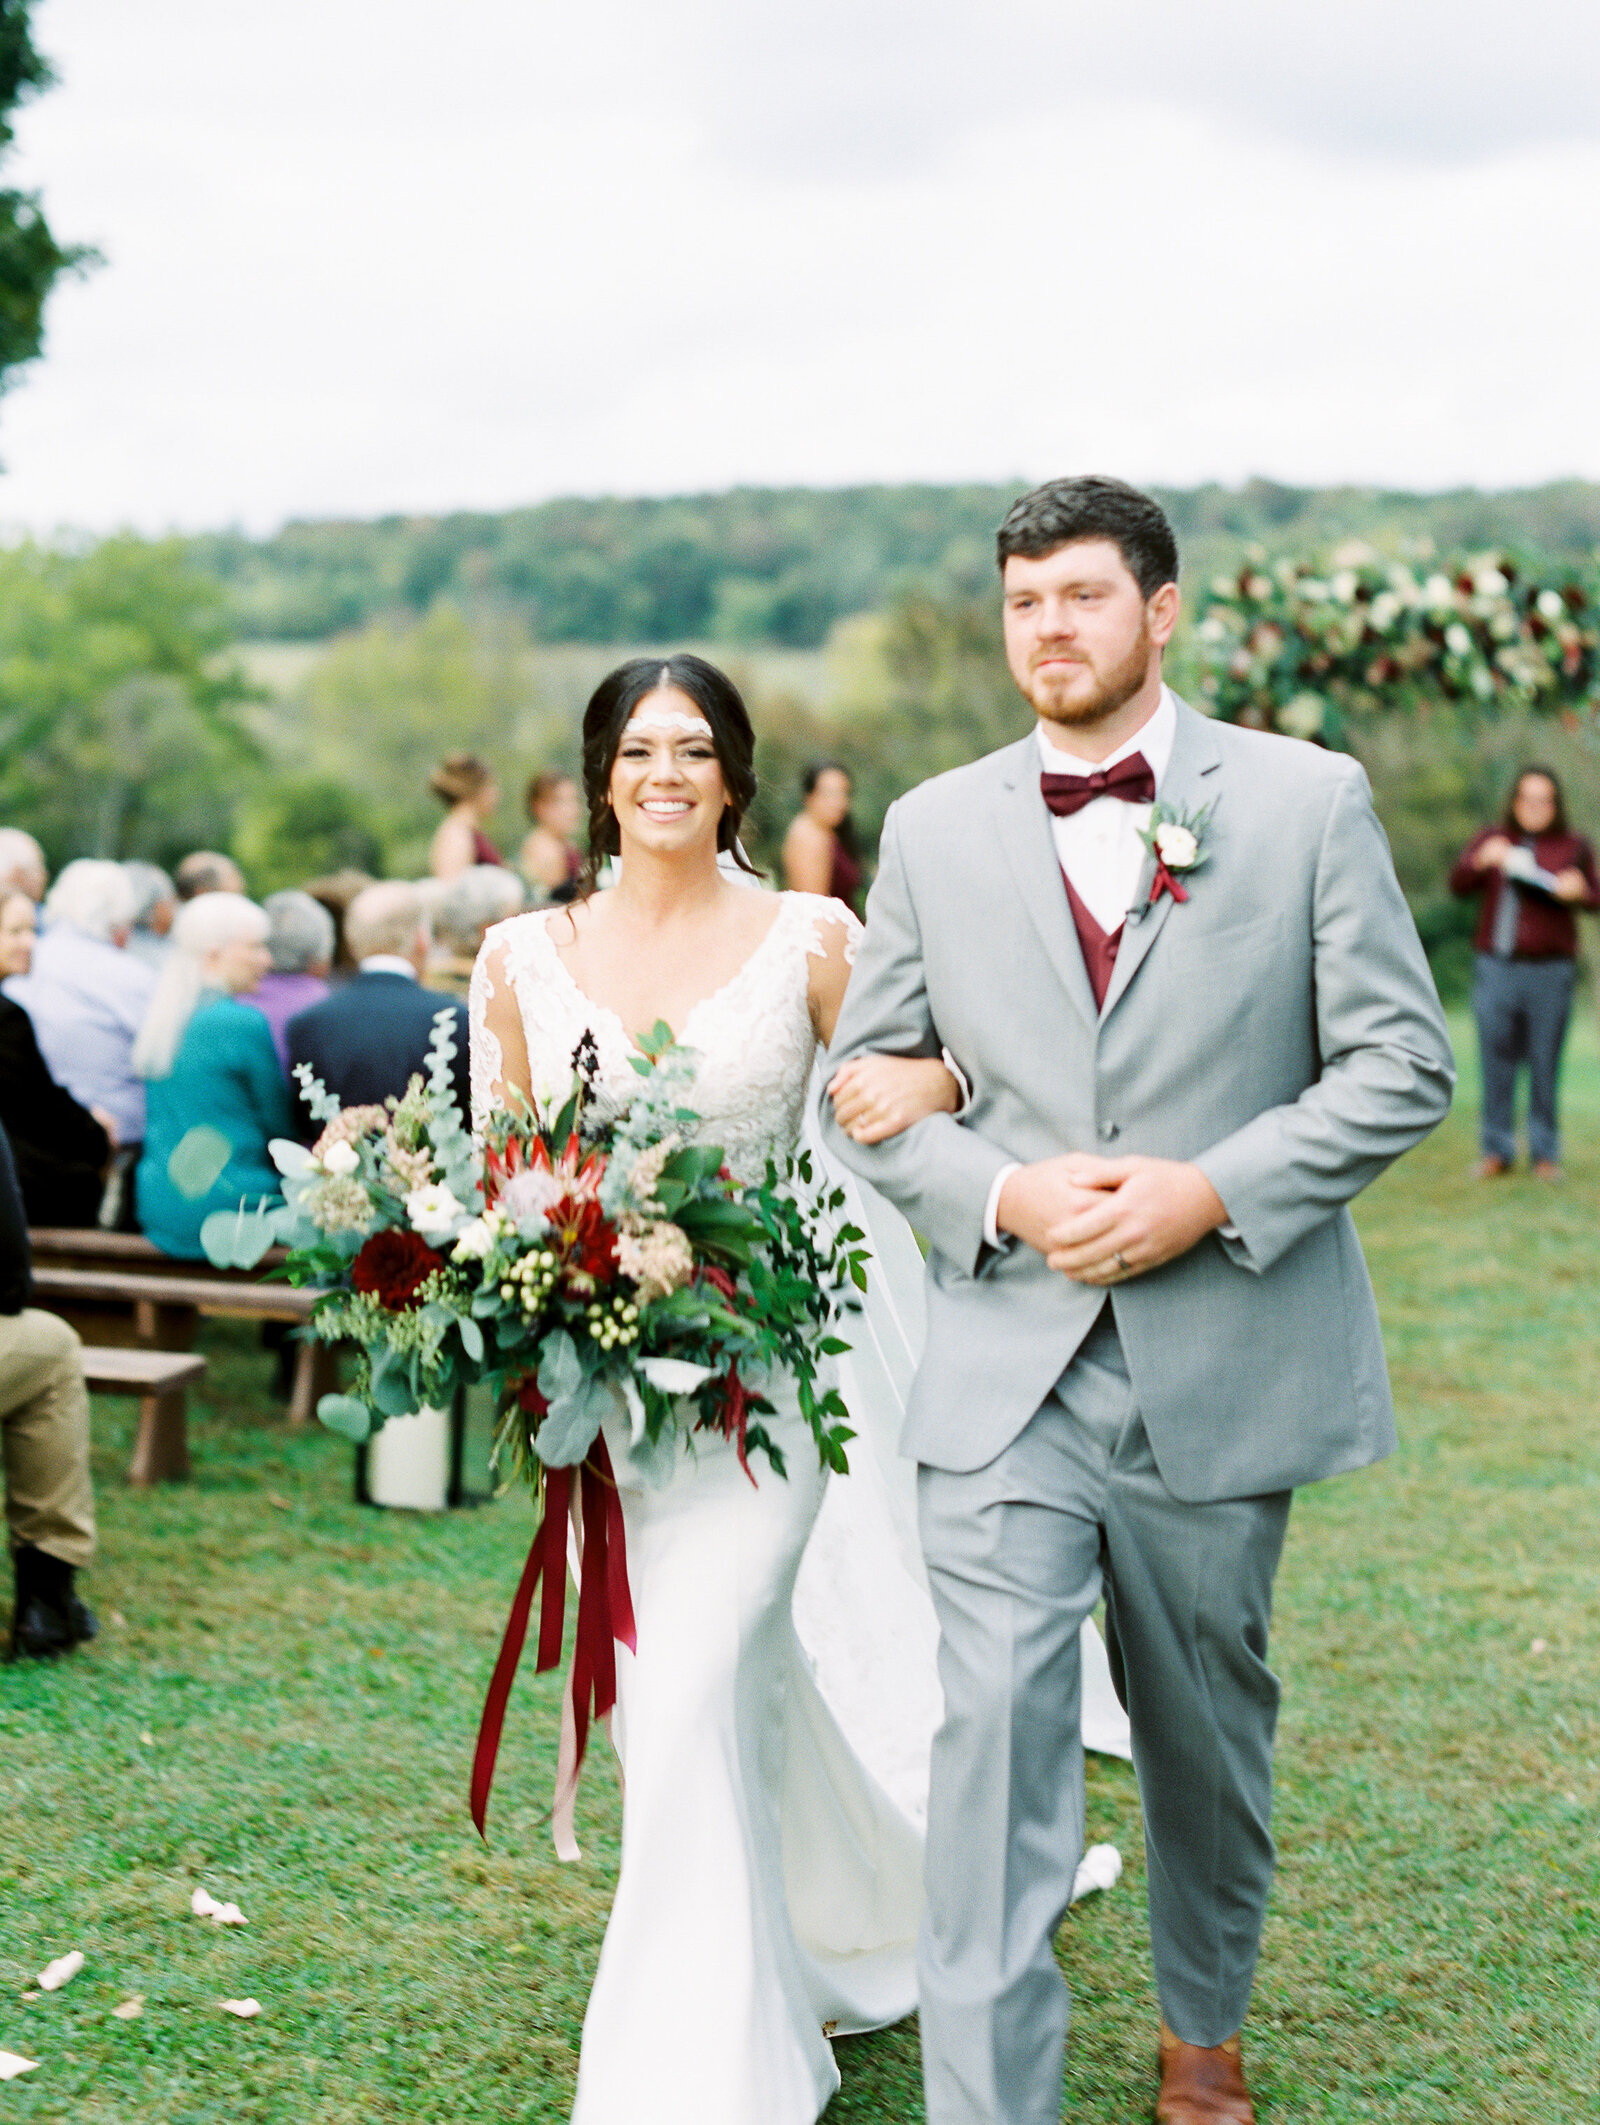 Rachel-Carter-Photography-Alabama-Tennessee-Fine-Art-Film-Wedding-Photographer-144